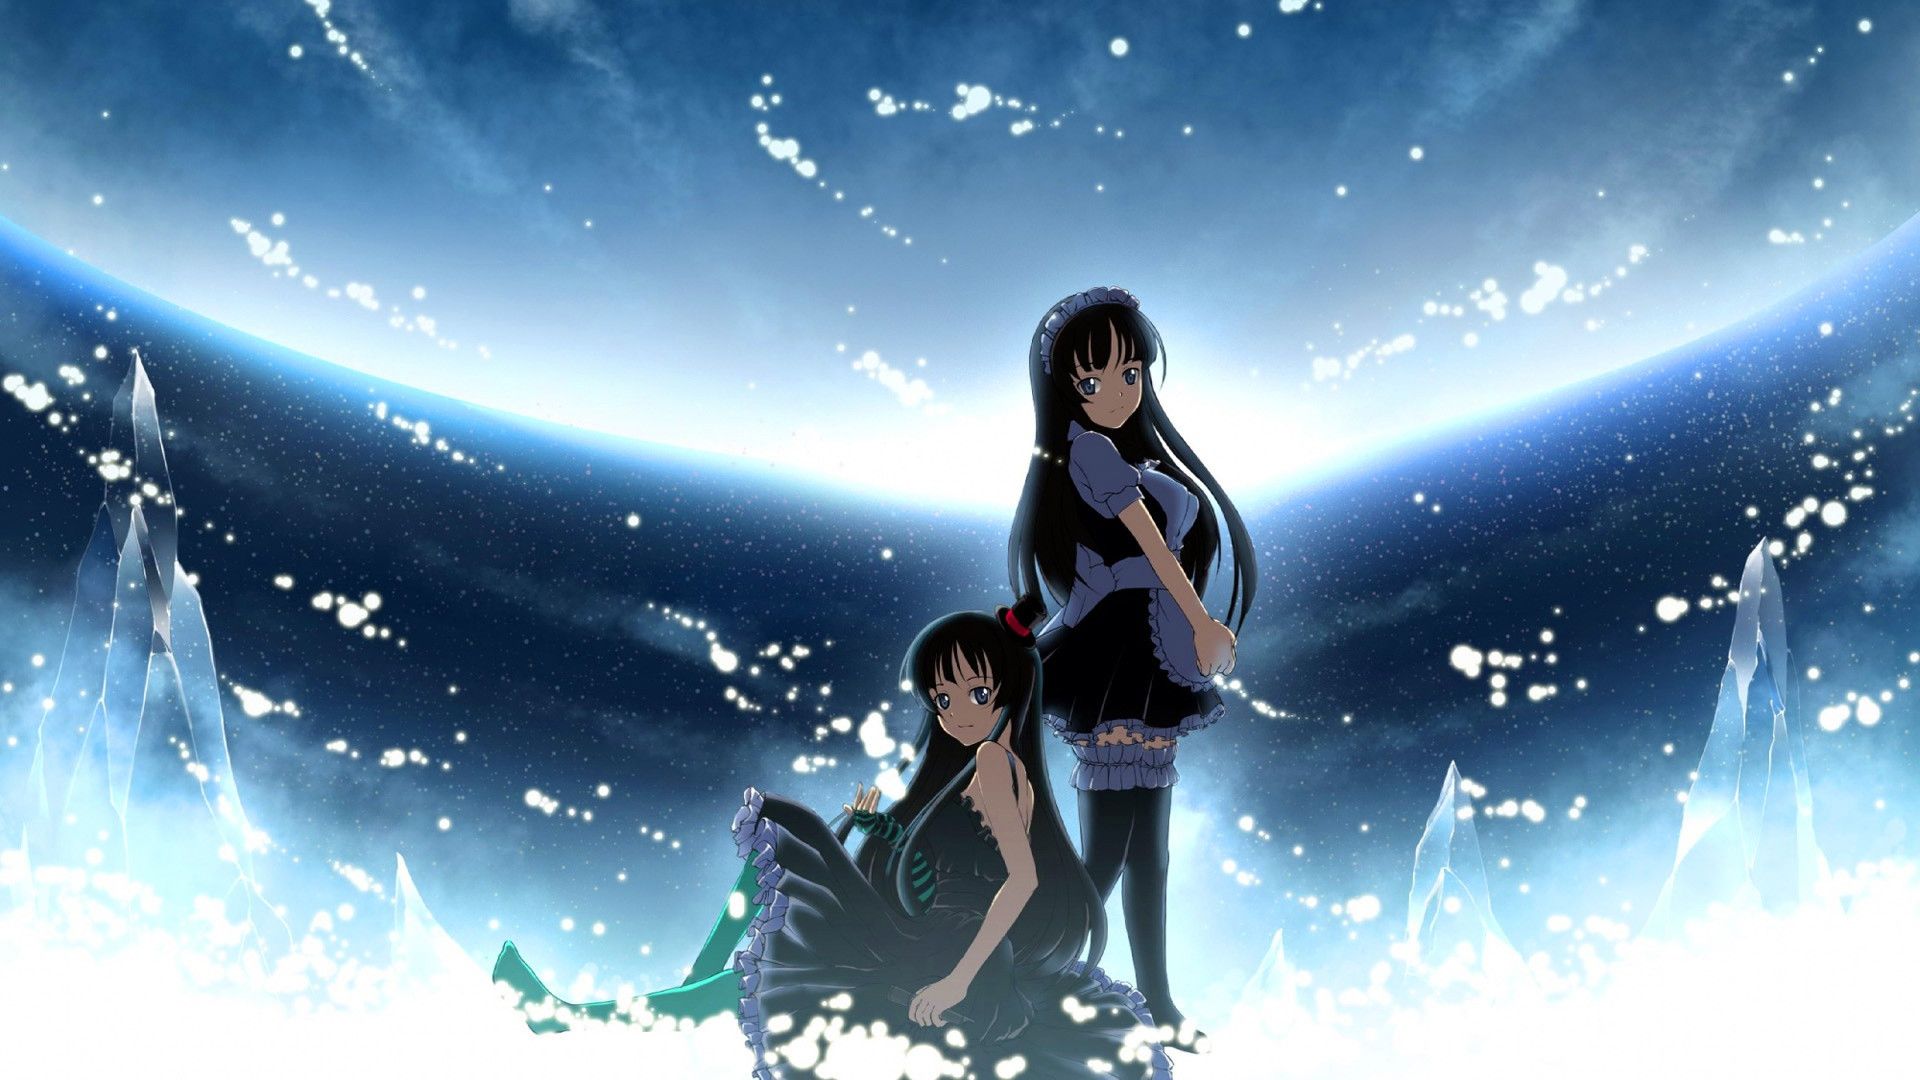 Best 52+ Anime Desktop Backgrounds on HipWallpapers